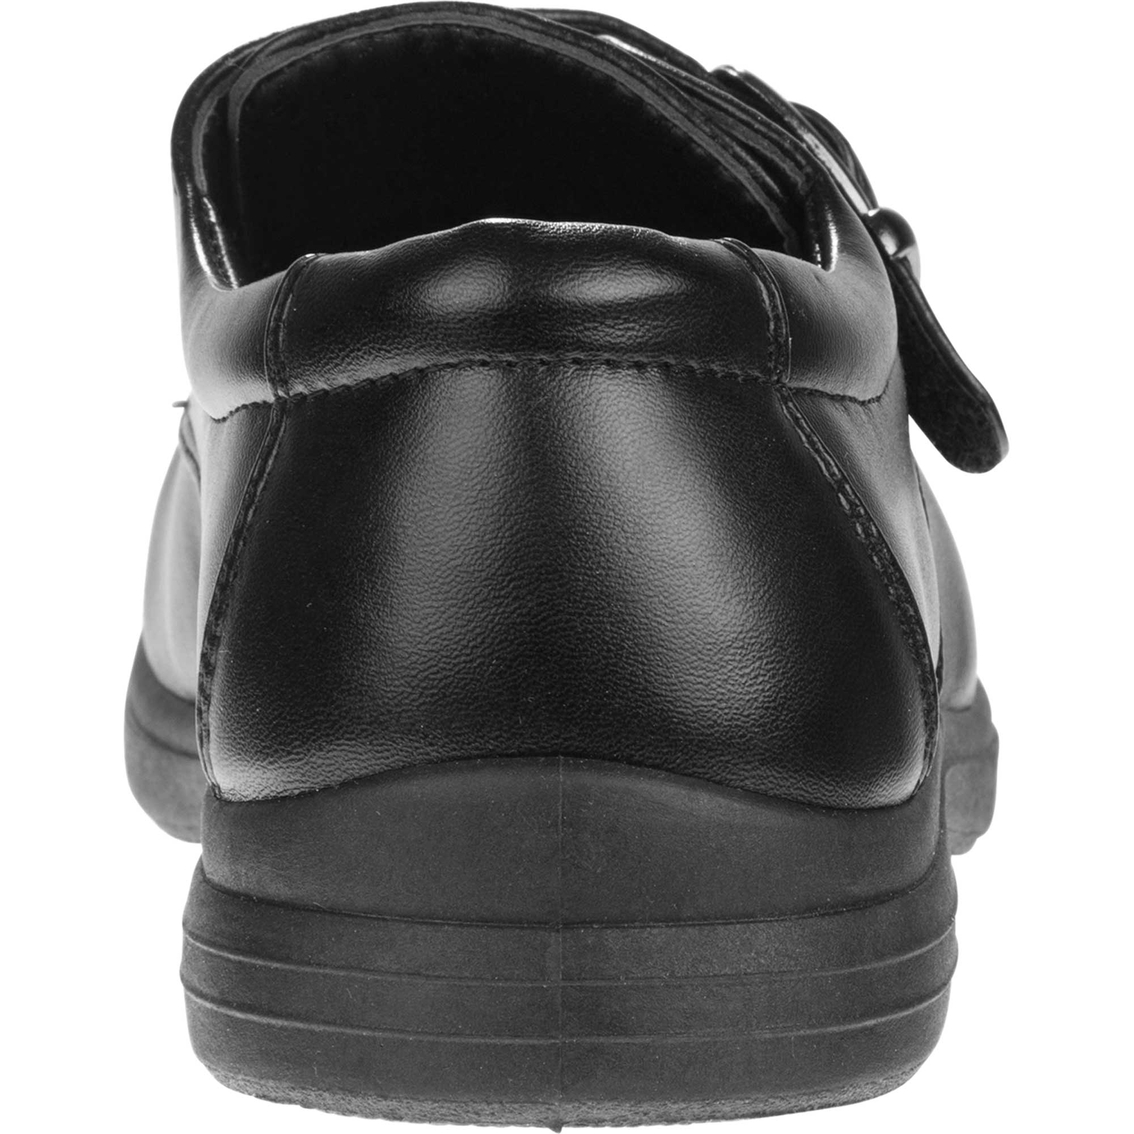 Josmo Preschool Boys Monk Strap Dress Shoes - Image 2 of 5